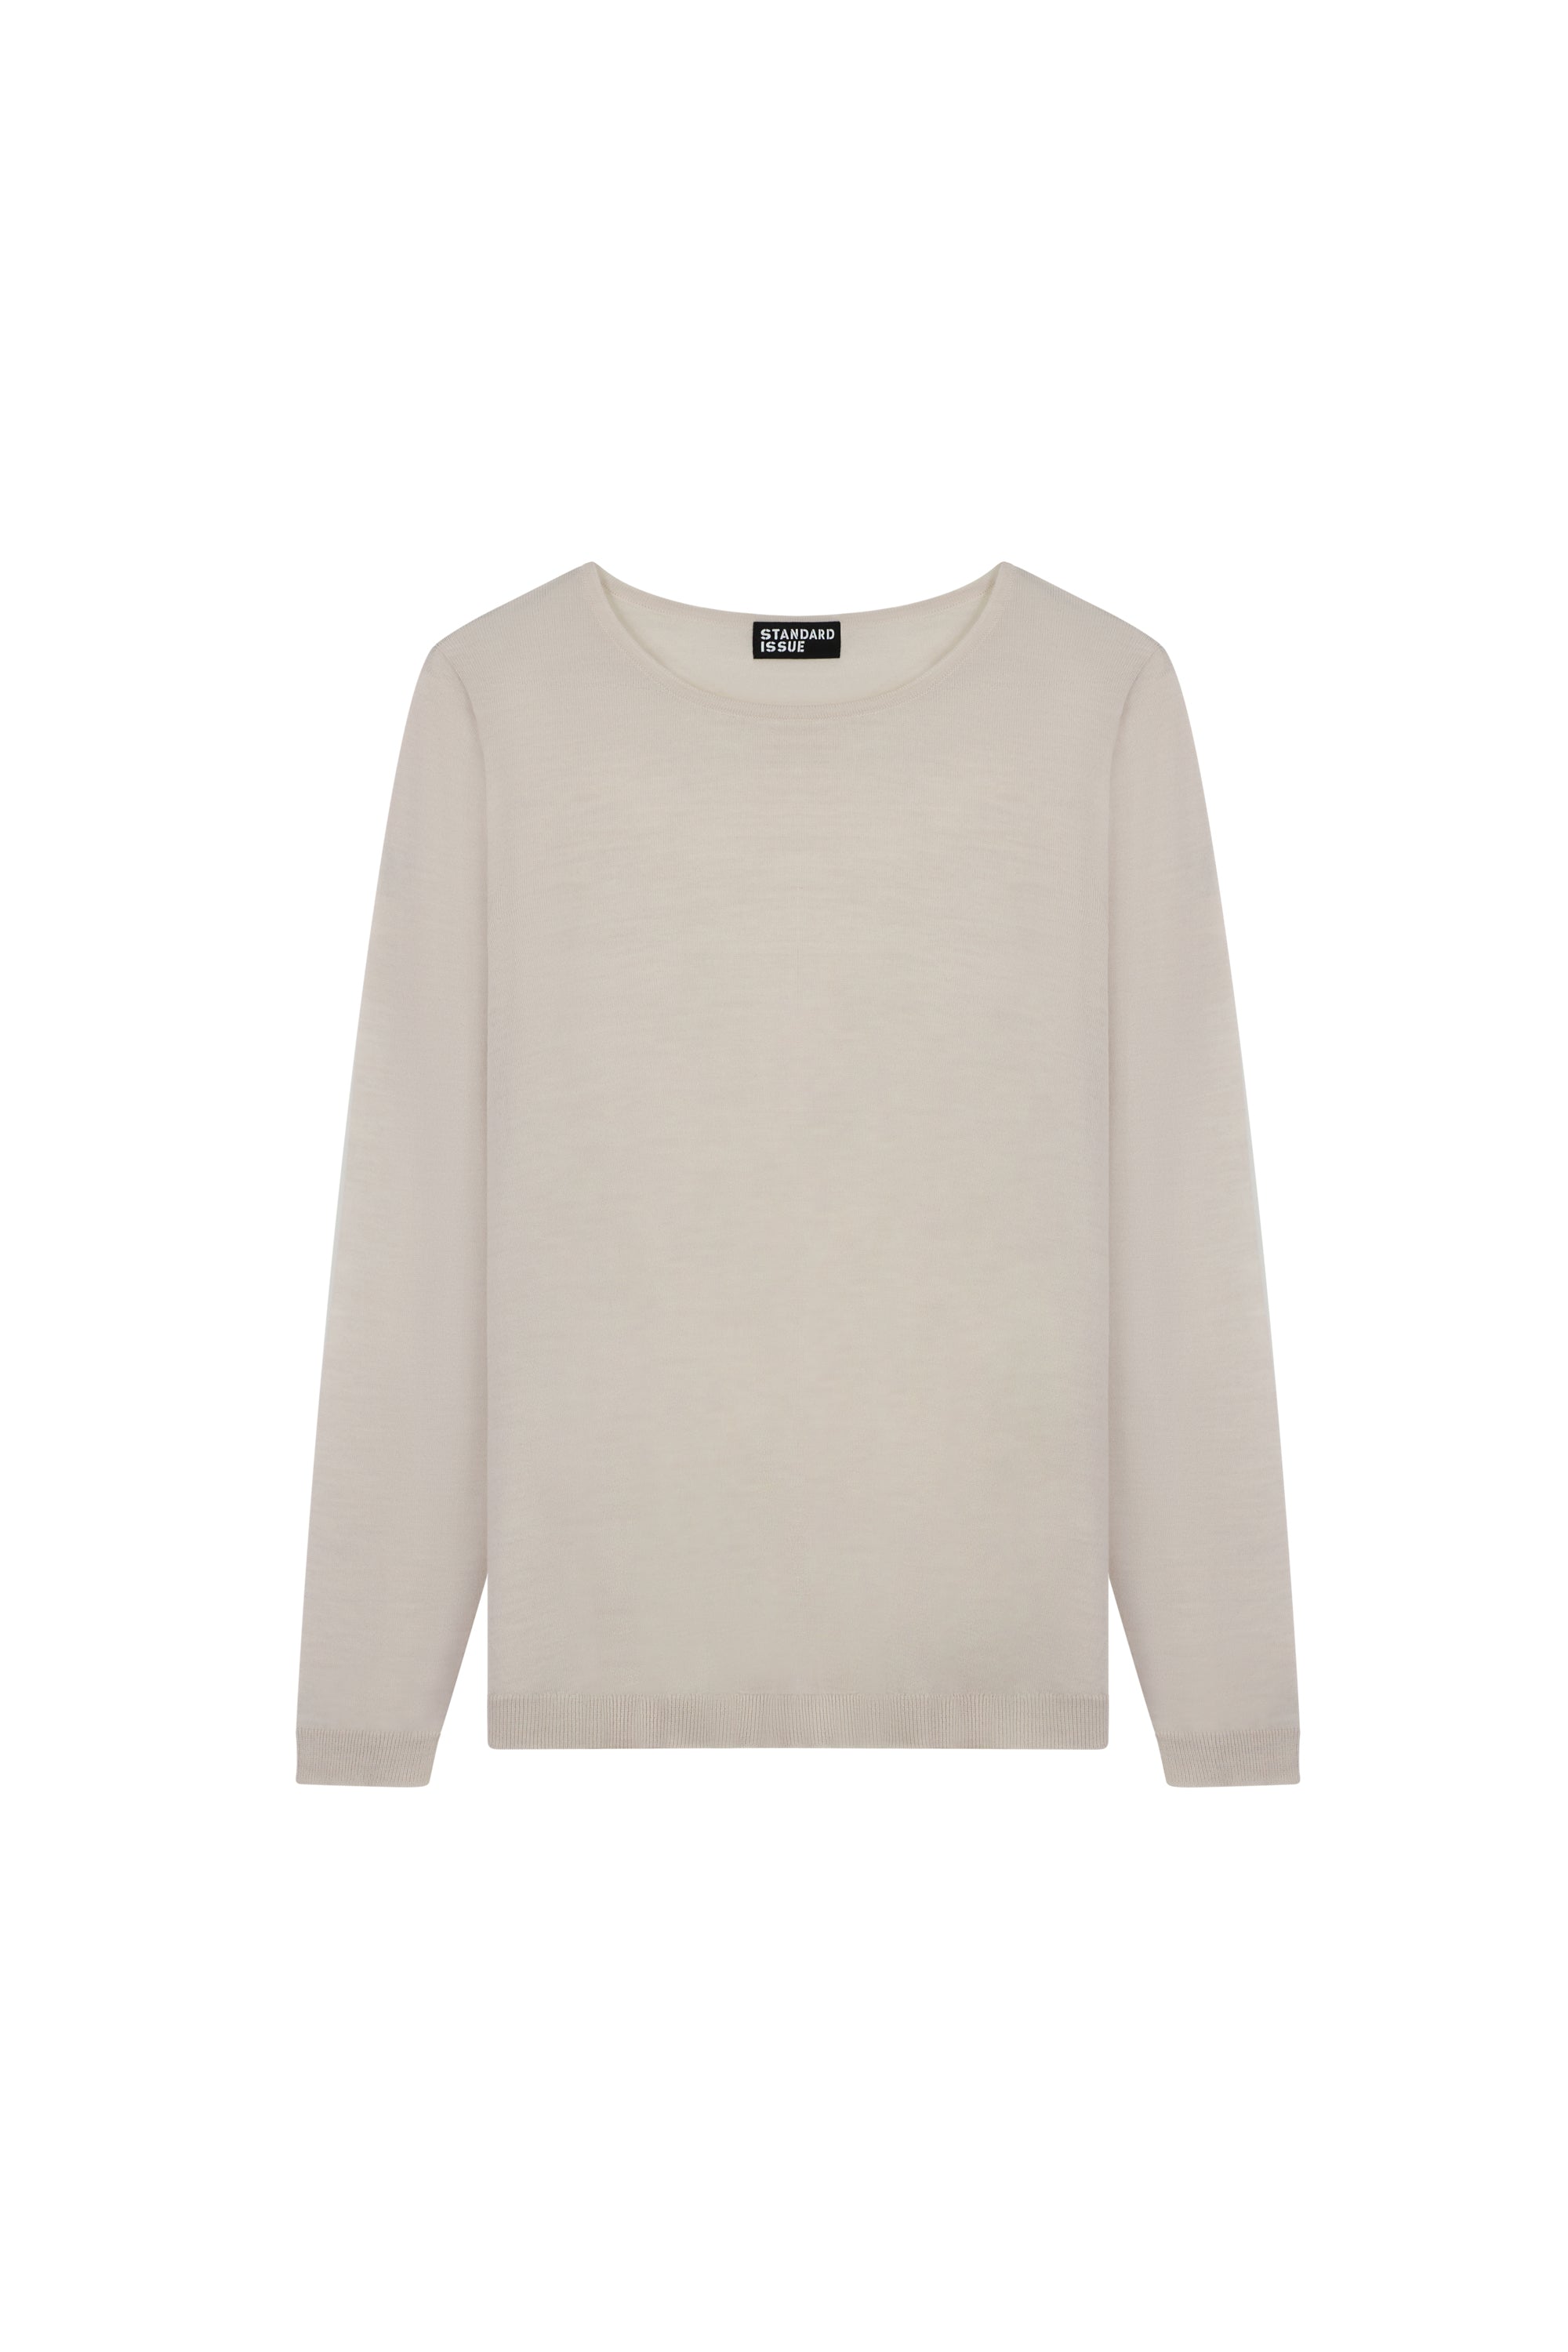 Standard Issue Merino Swing Sweater in Alabaster White